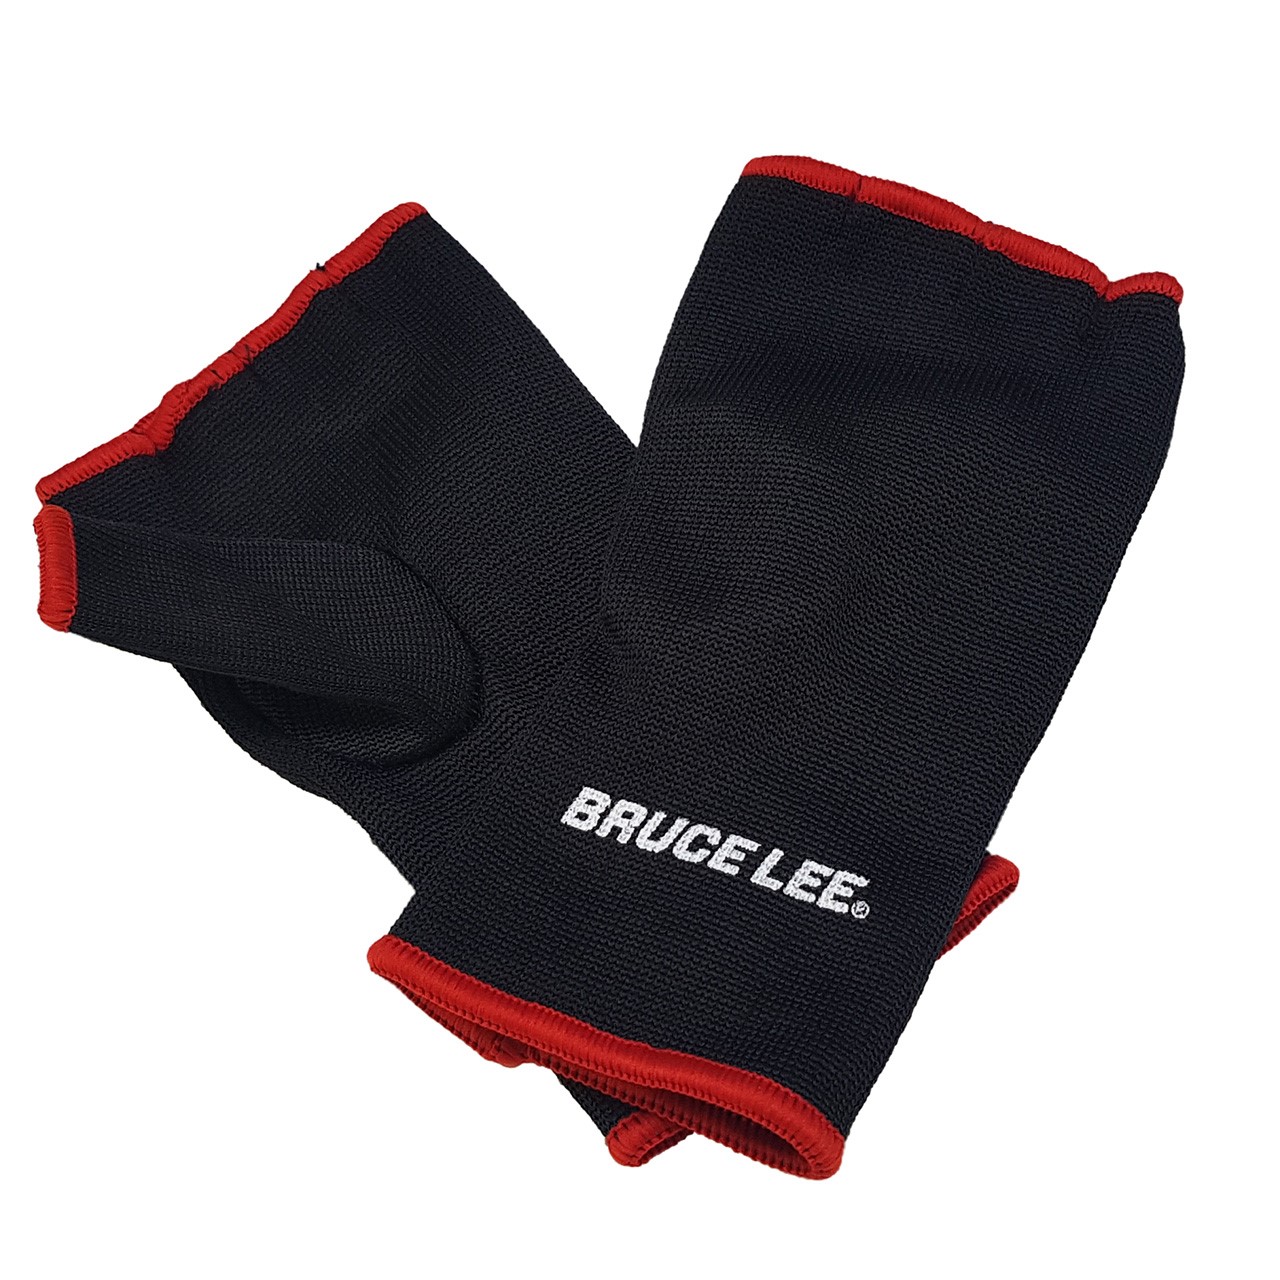 Bruce Lee Easy Fit Boxing Bandages